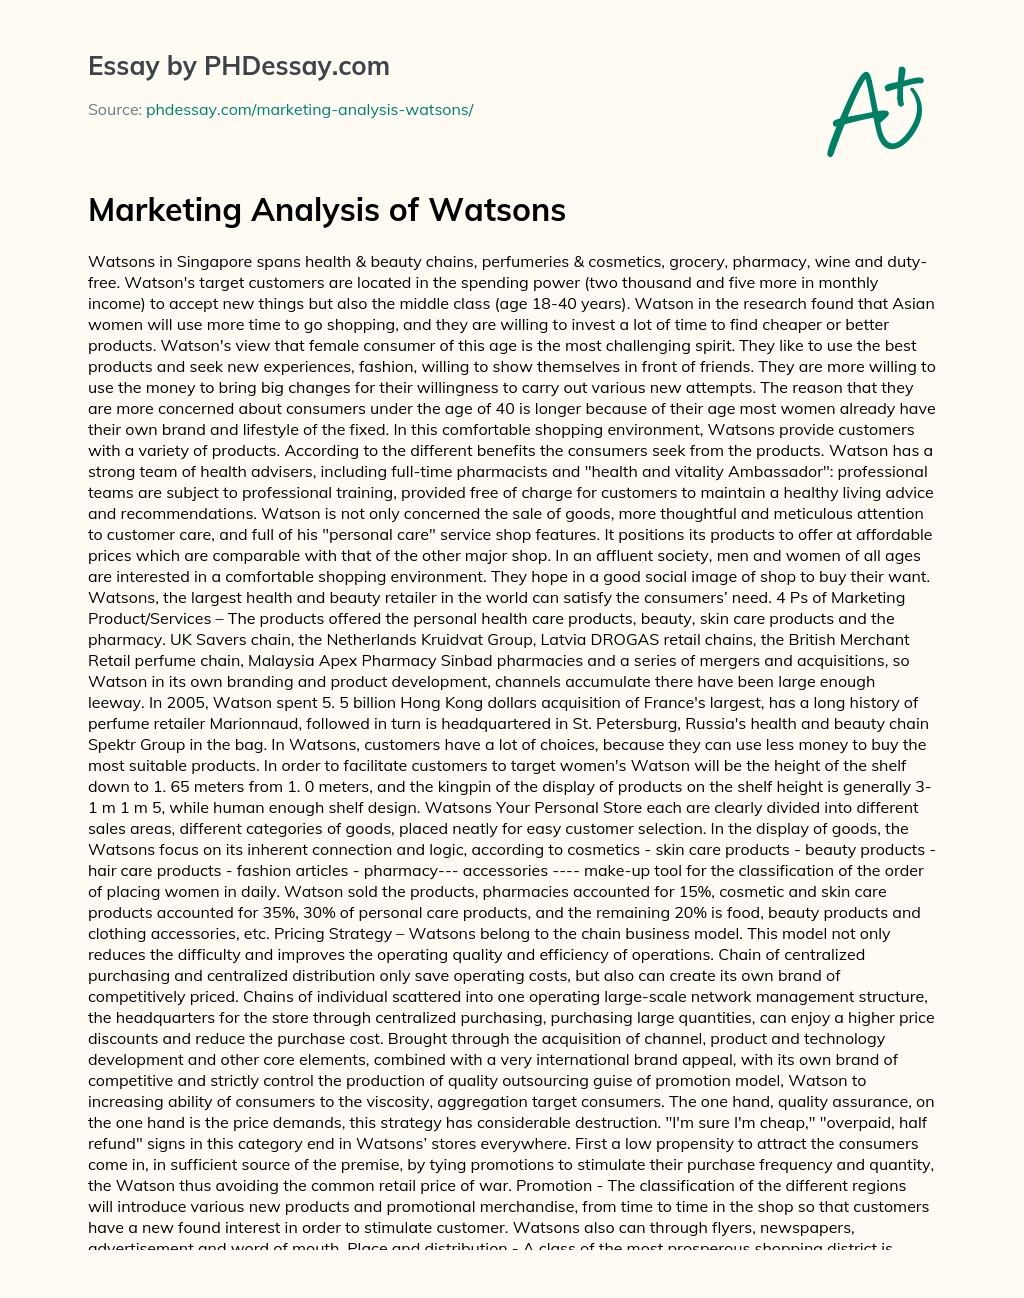 Marketing Analysis of Watsons essay